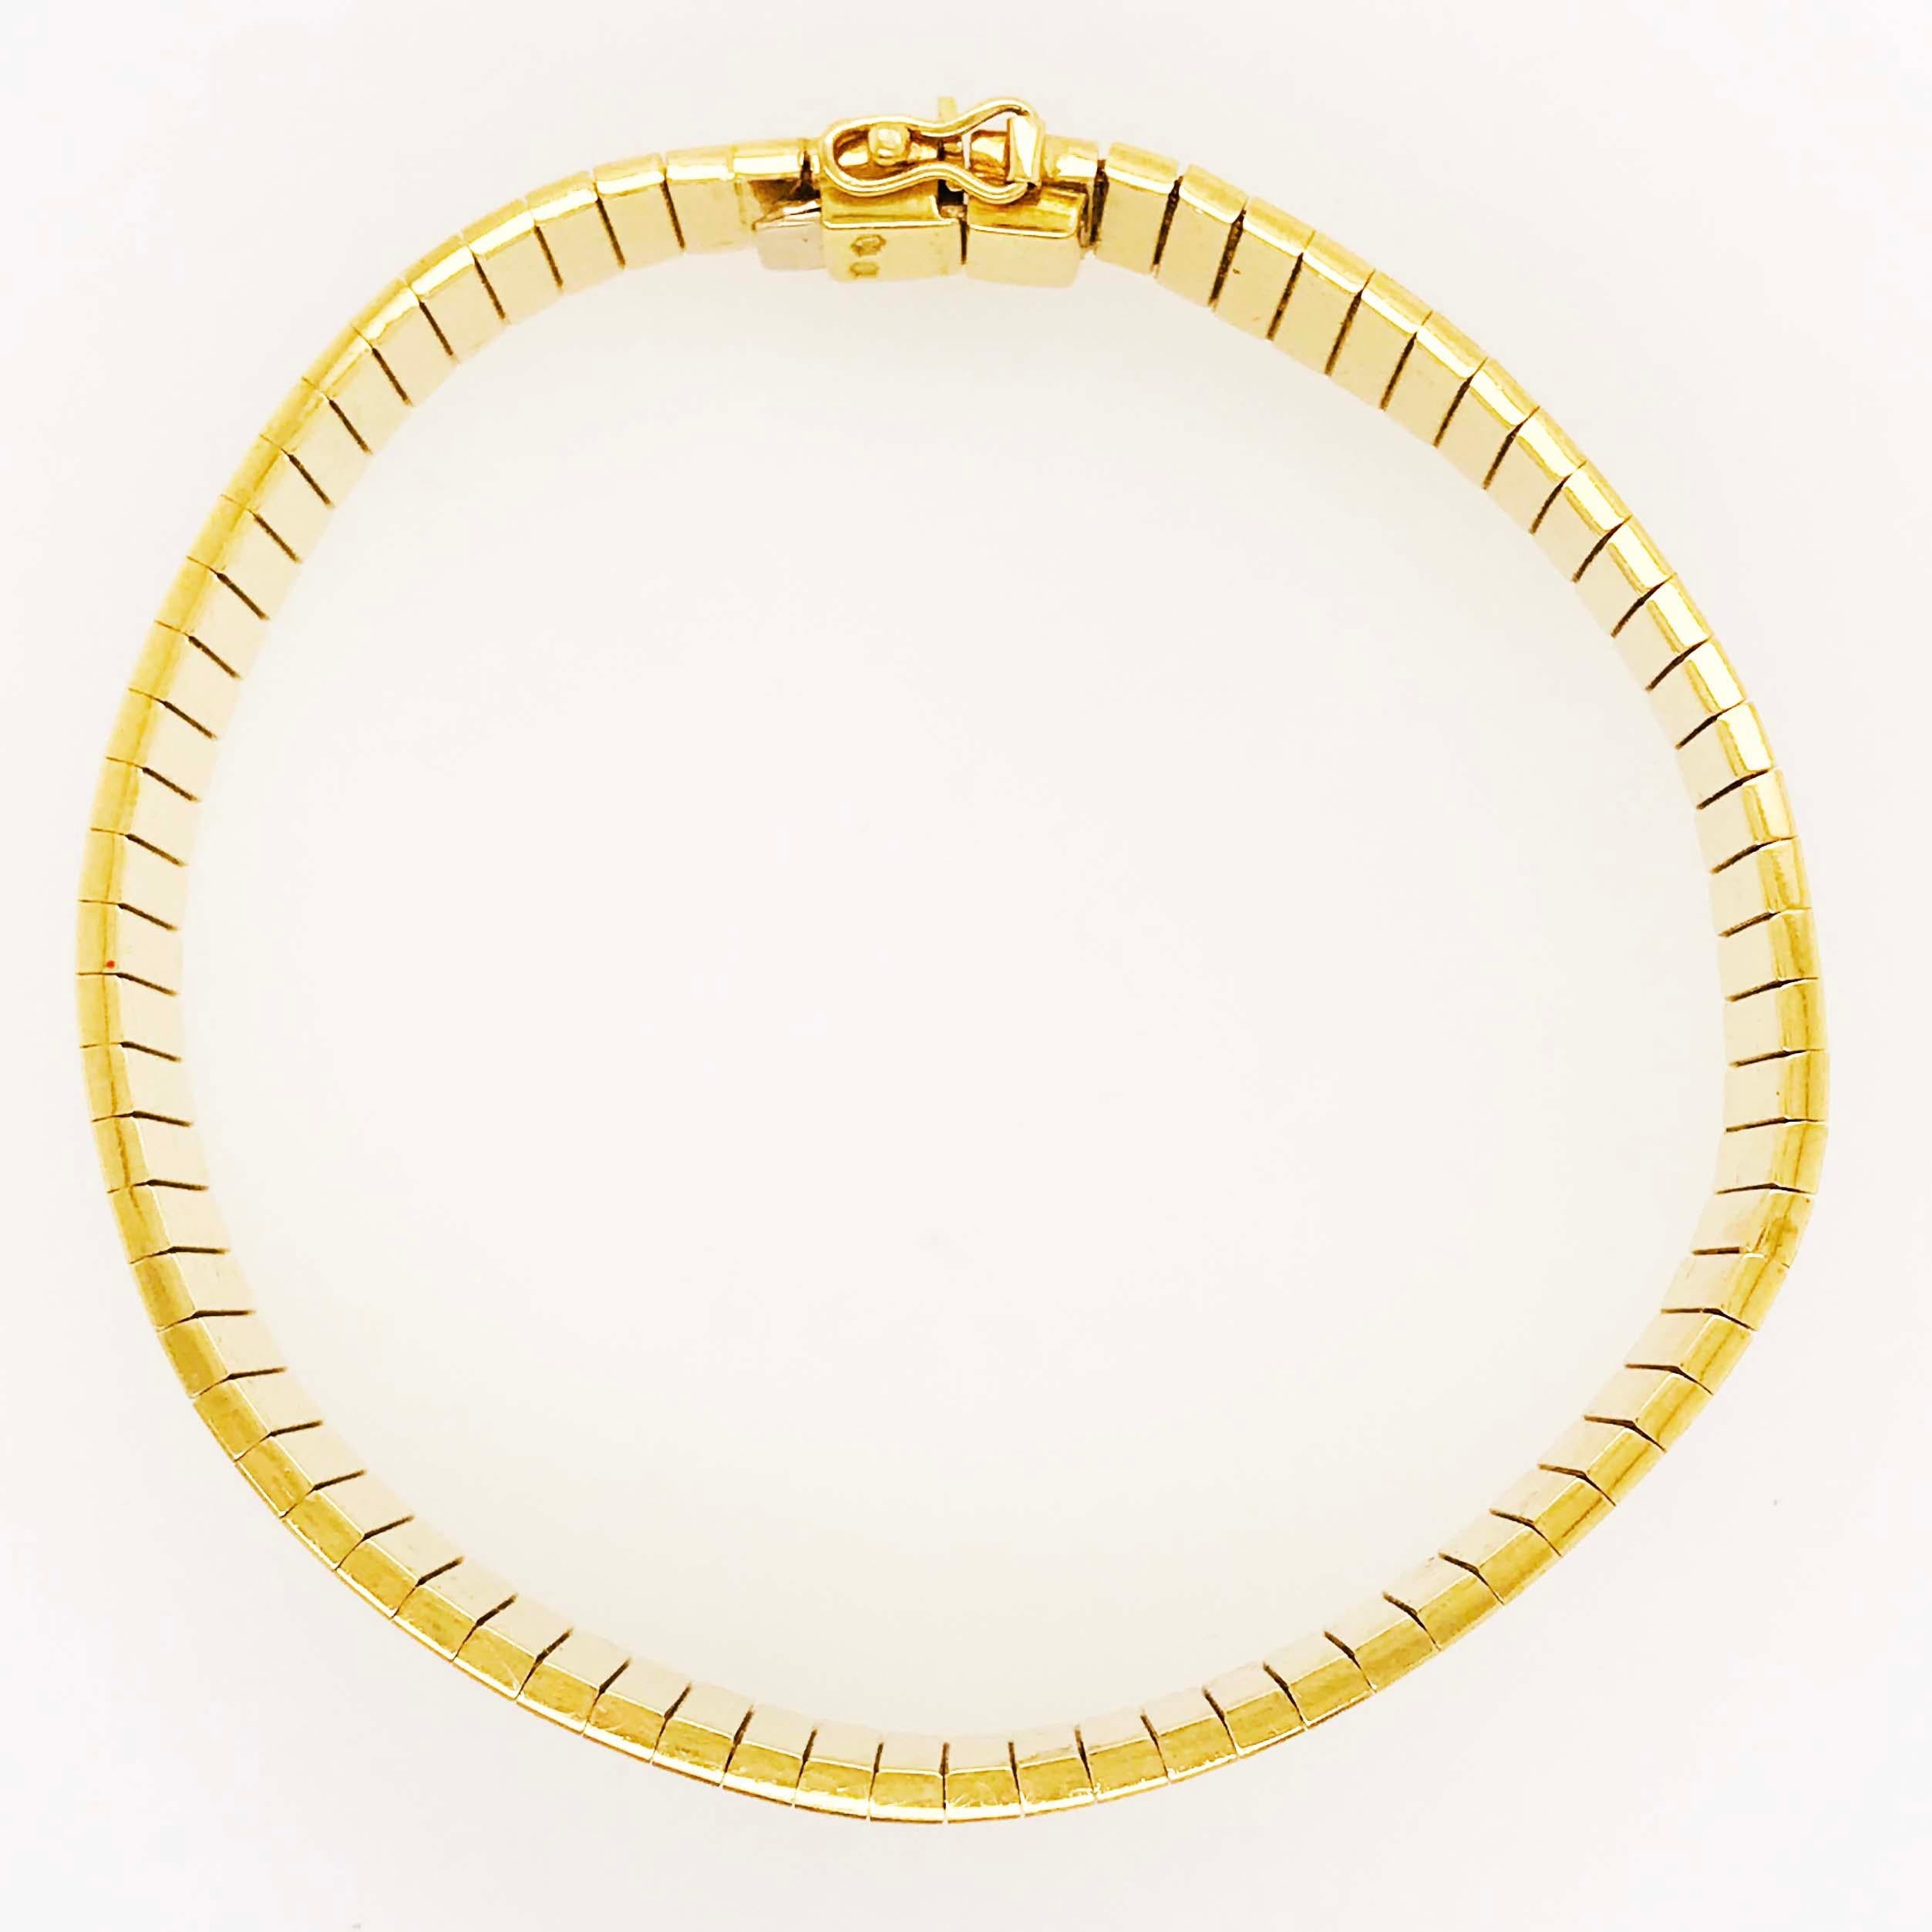 Gold Omega Bracelet in 18 Karat Yellow Gold is Regal and Like a Bangle Bracelet 5